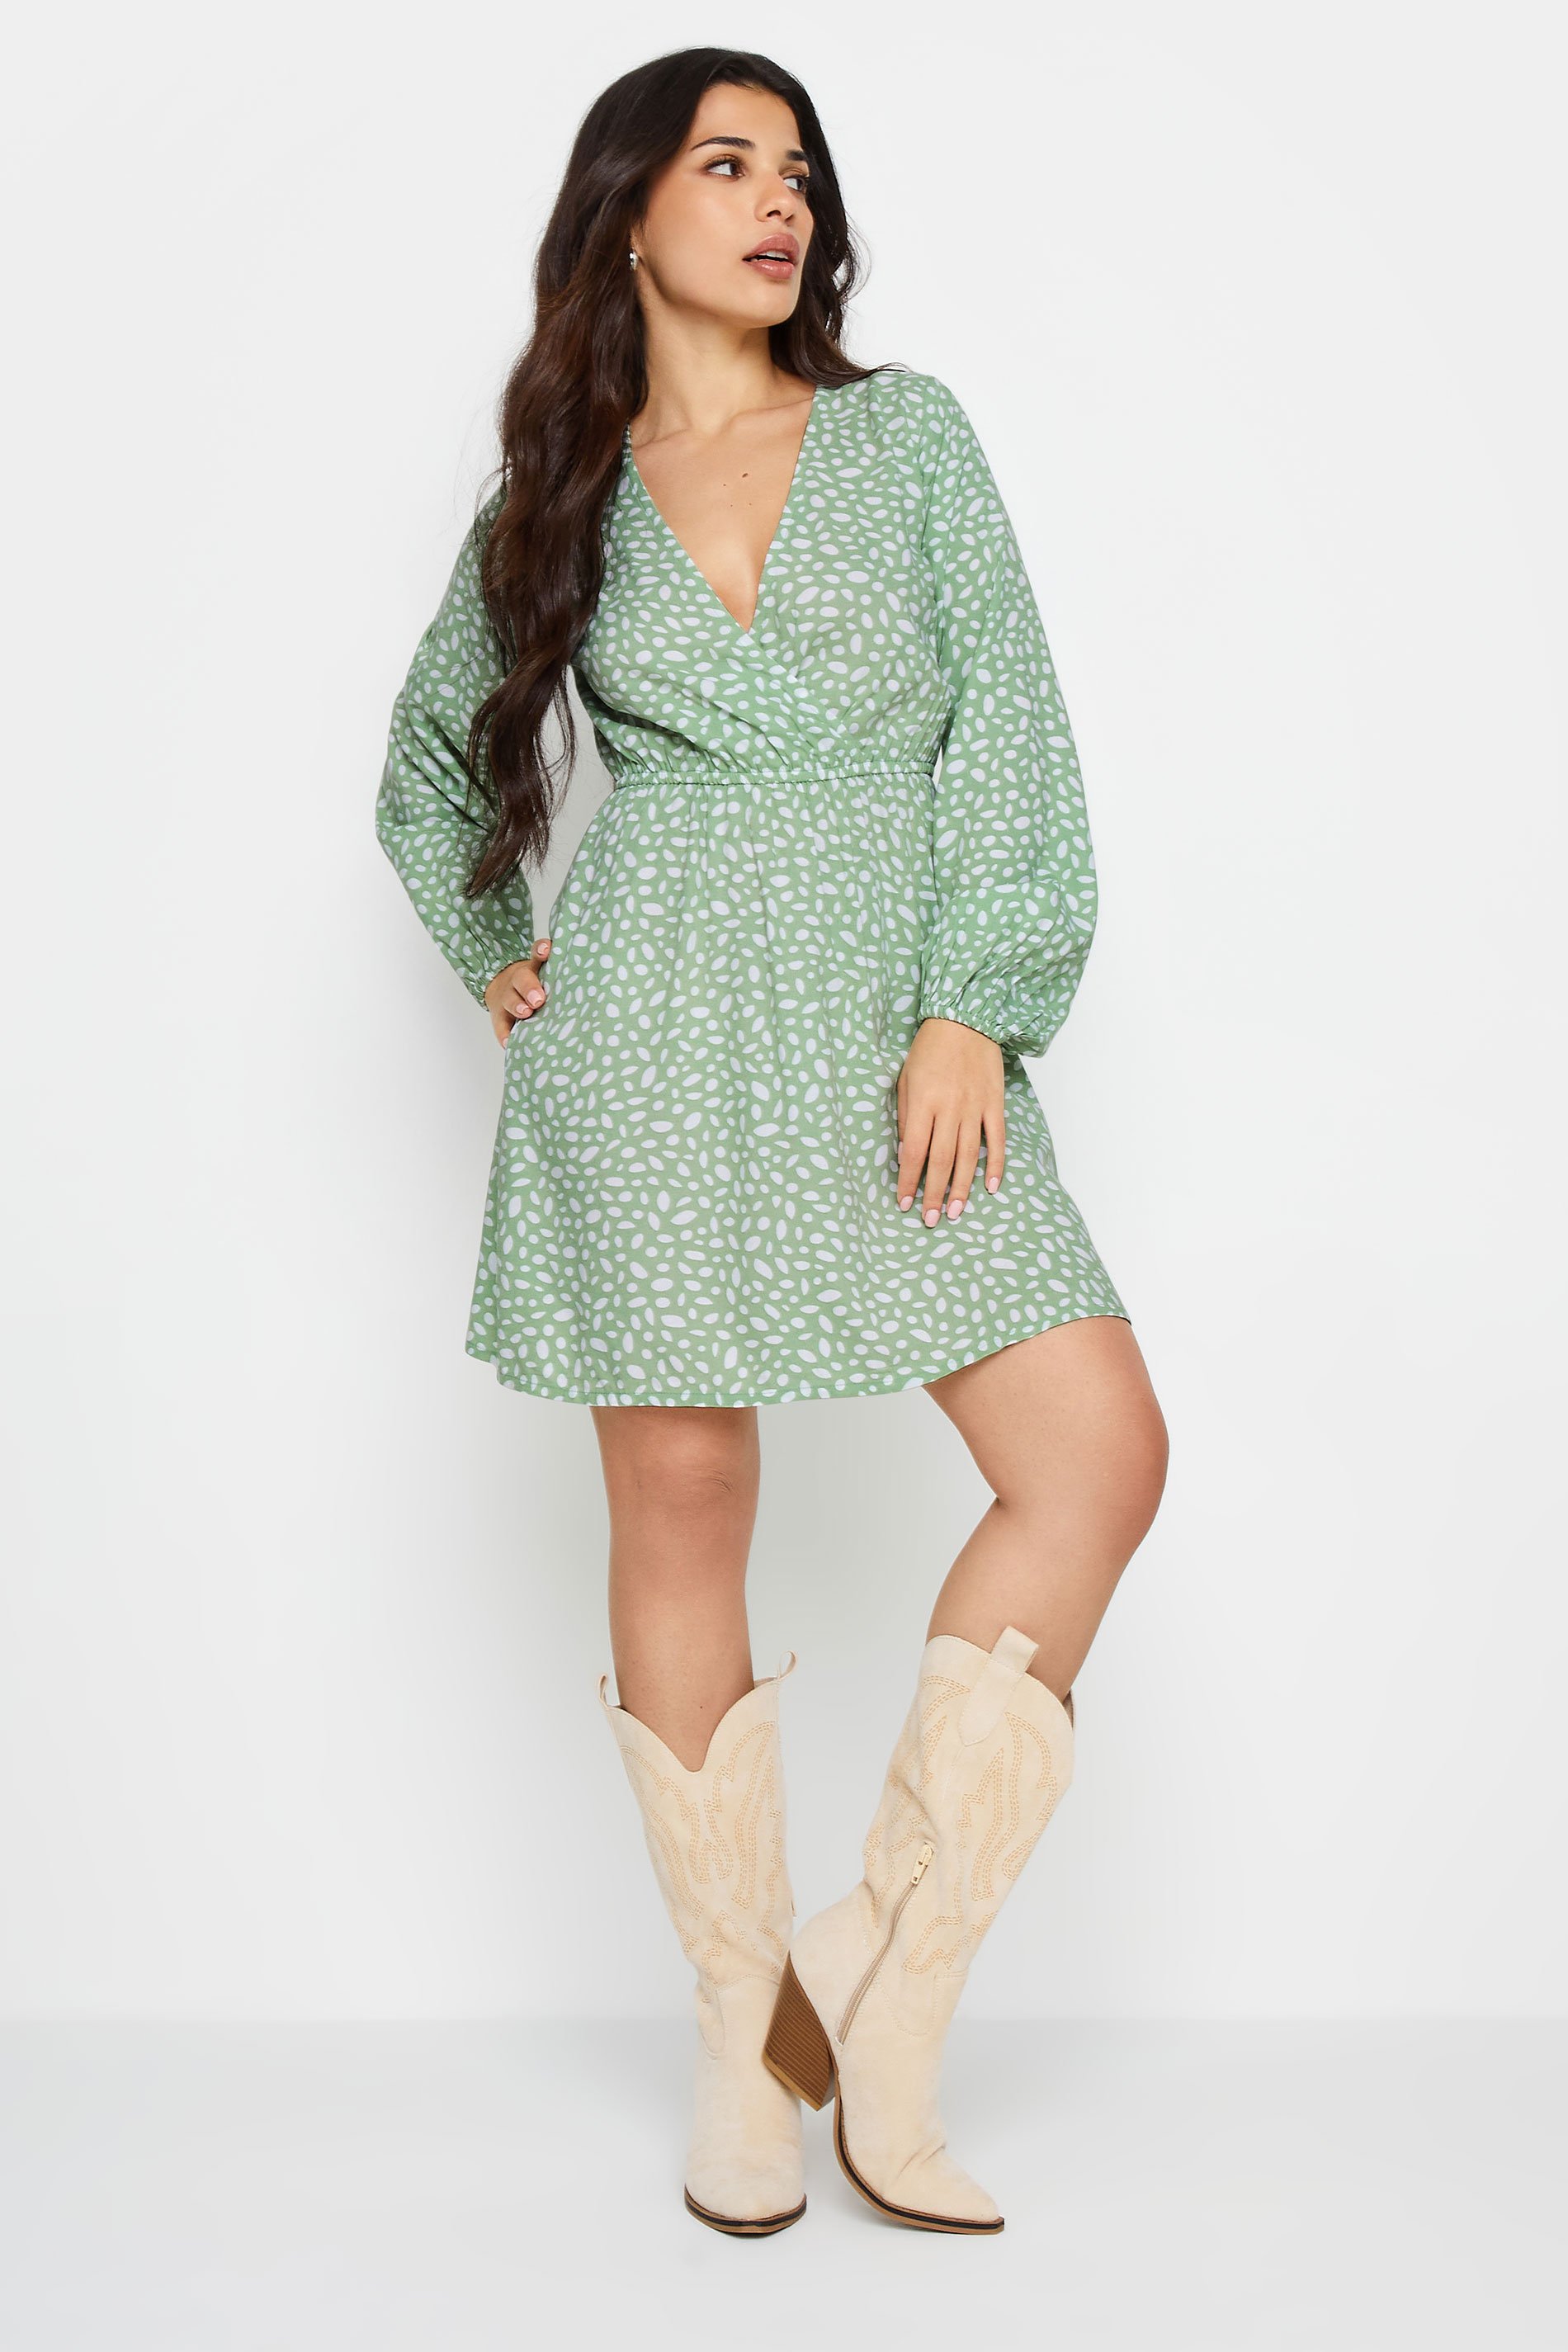 PixieGirl Petite Women's Sage Green Abstract Spot Print Mini Wrap Dress | PixieGirl 2